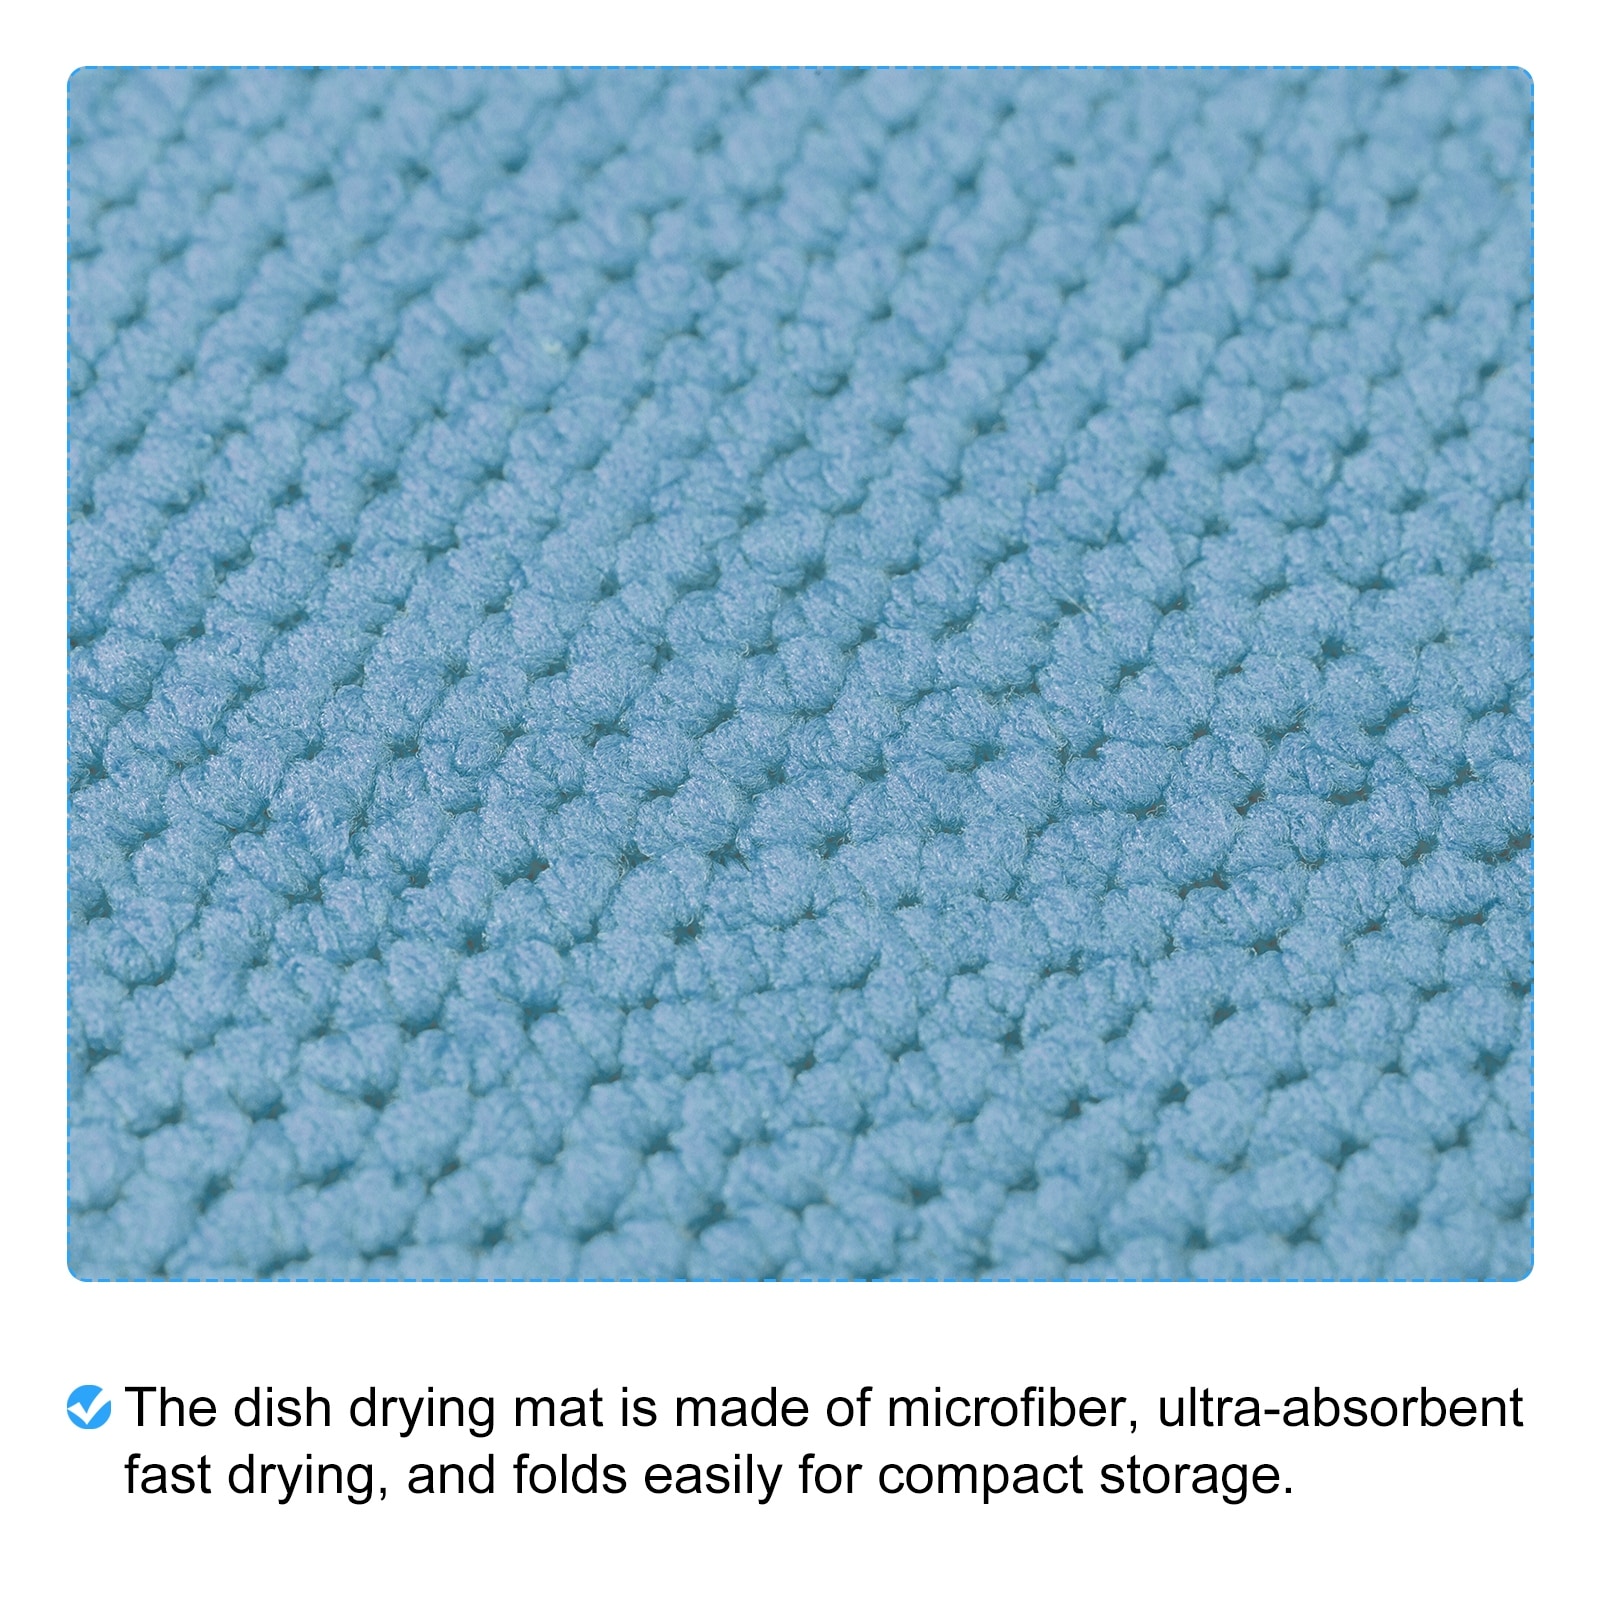 Unique Bargains 3pcs Microfiber Absorbent Dish Drying Mat for Countertop - Blue/Grey/Beige